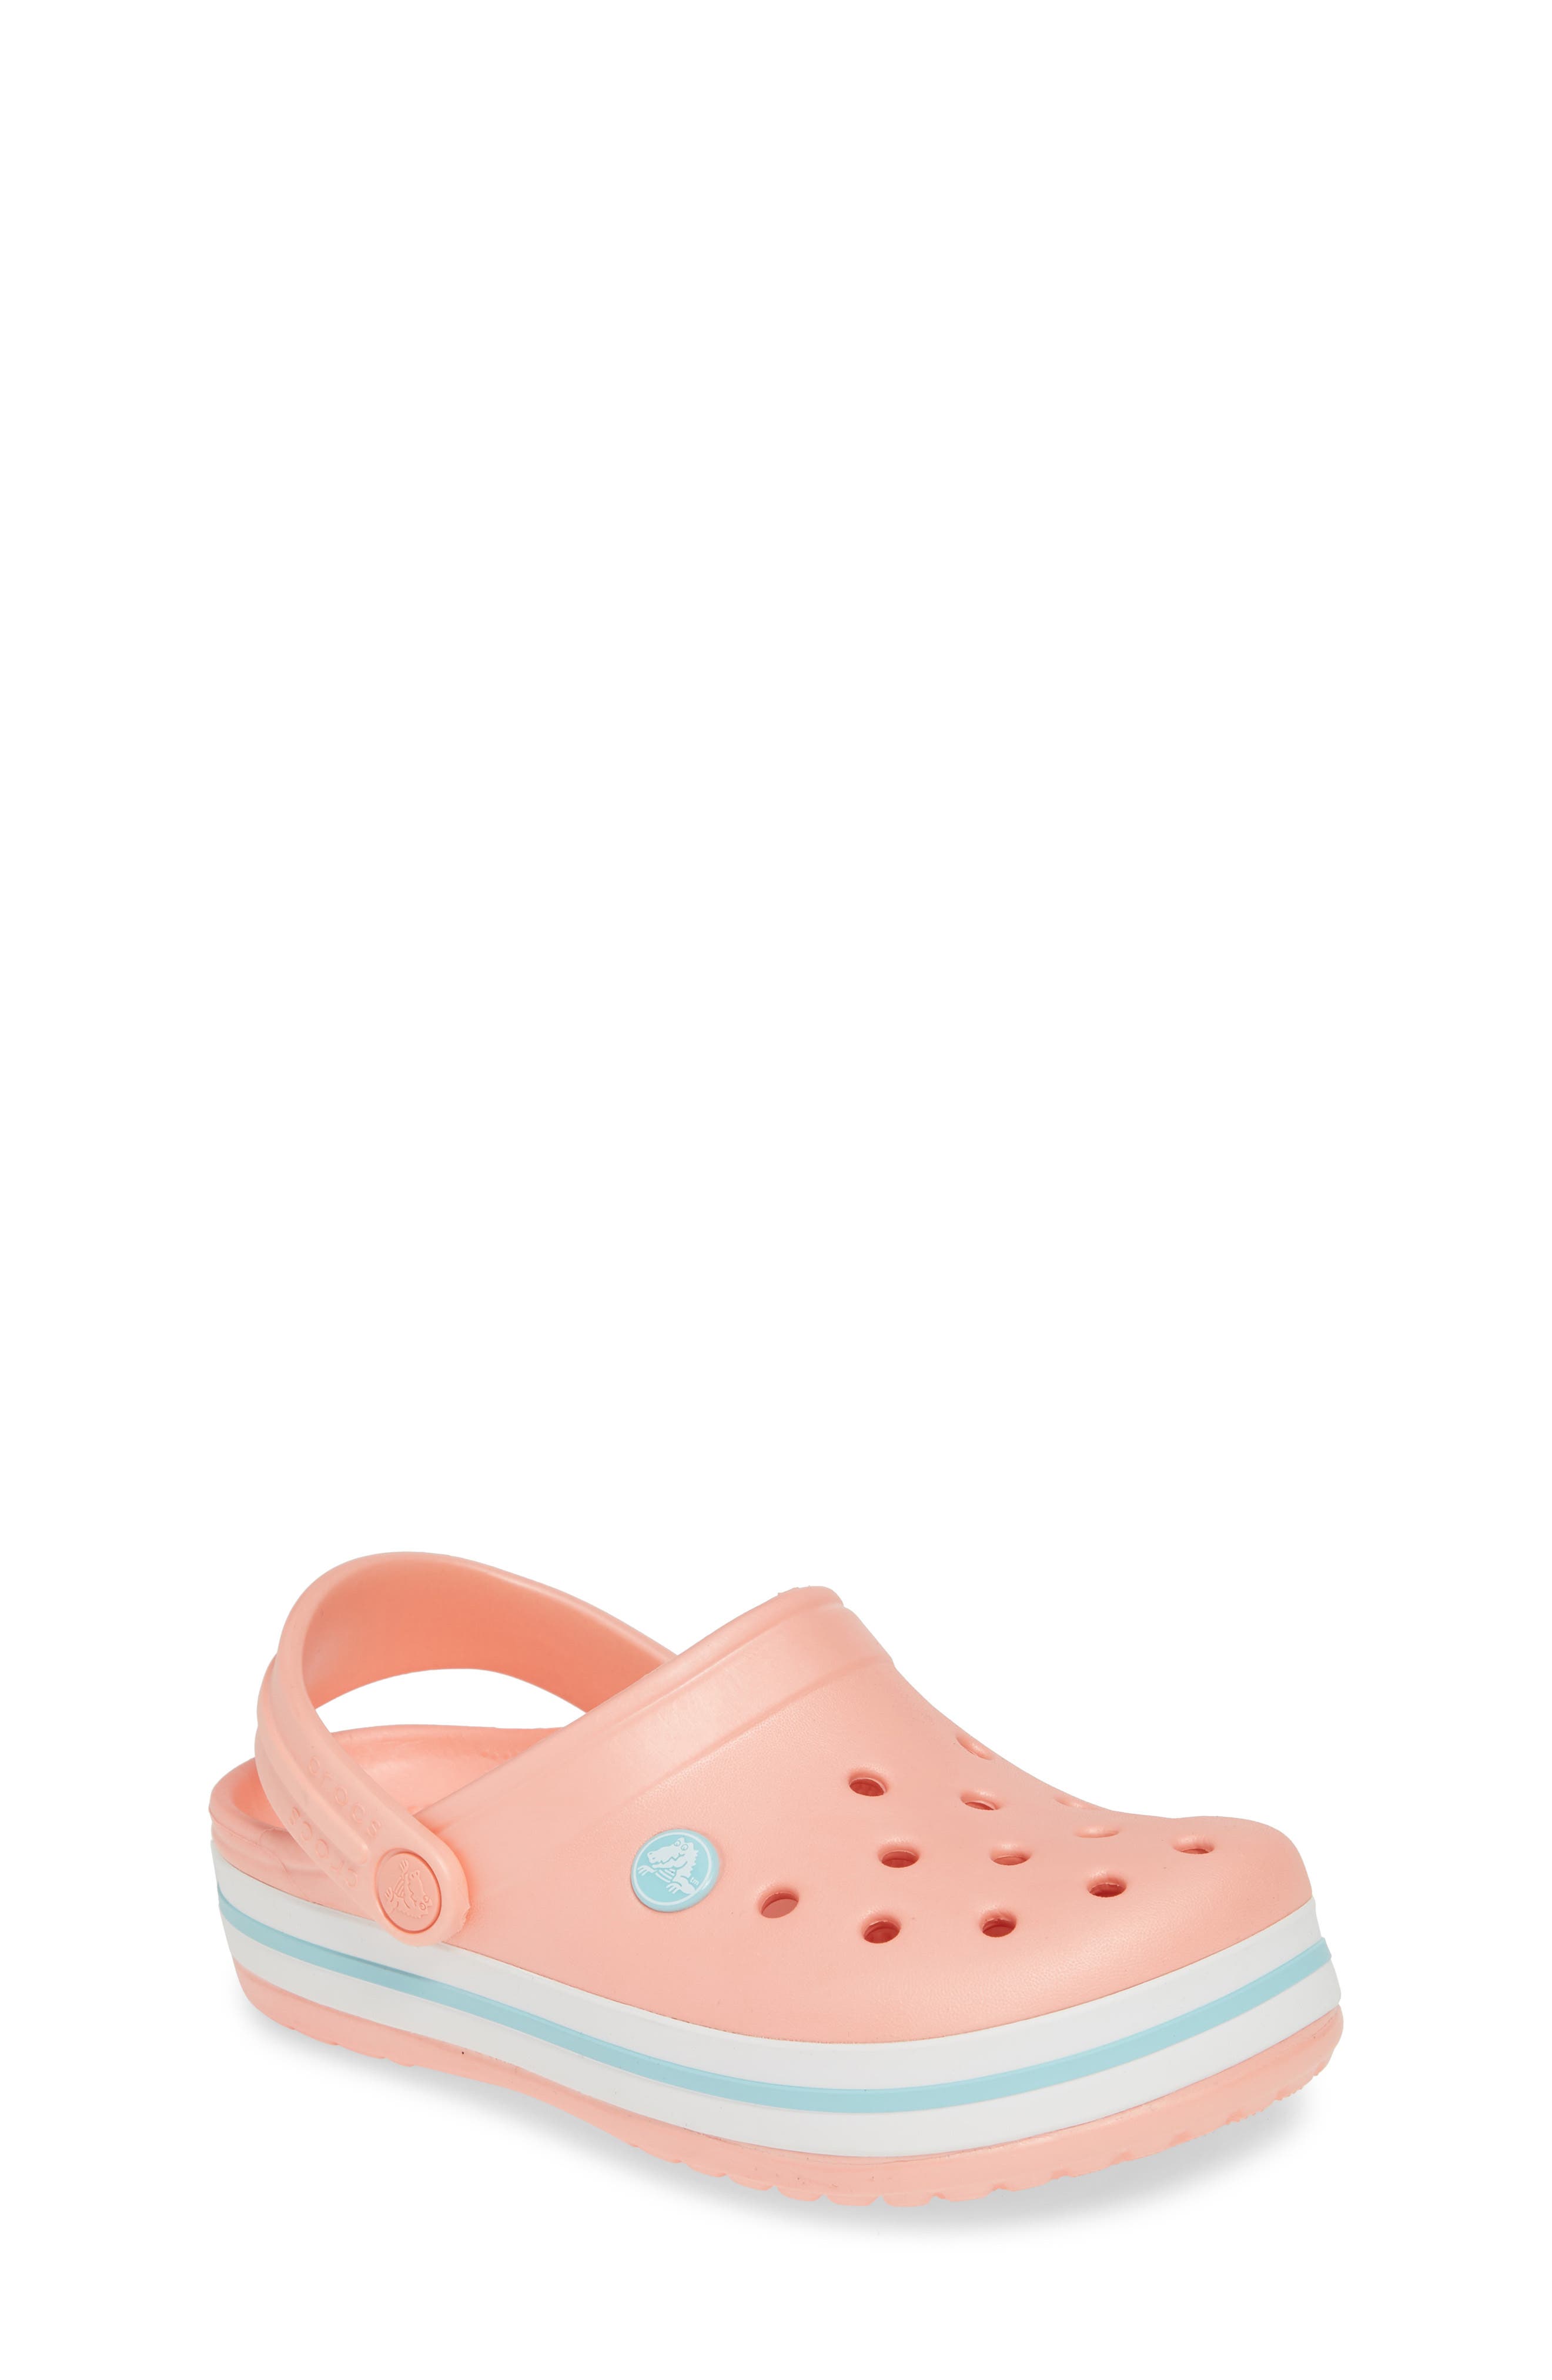 girls crocs size 2